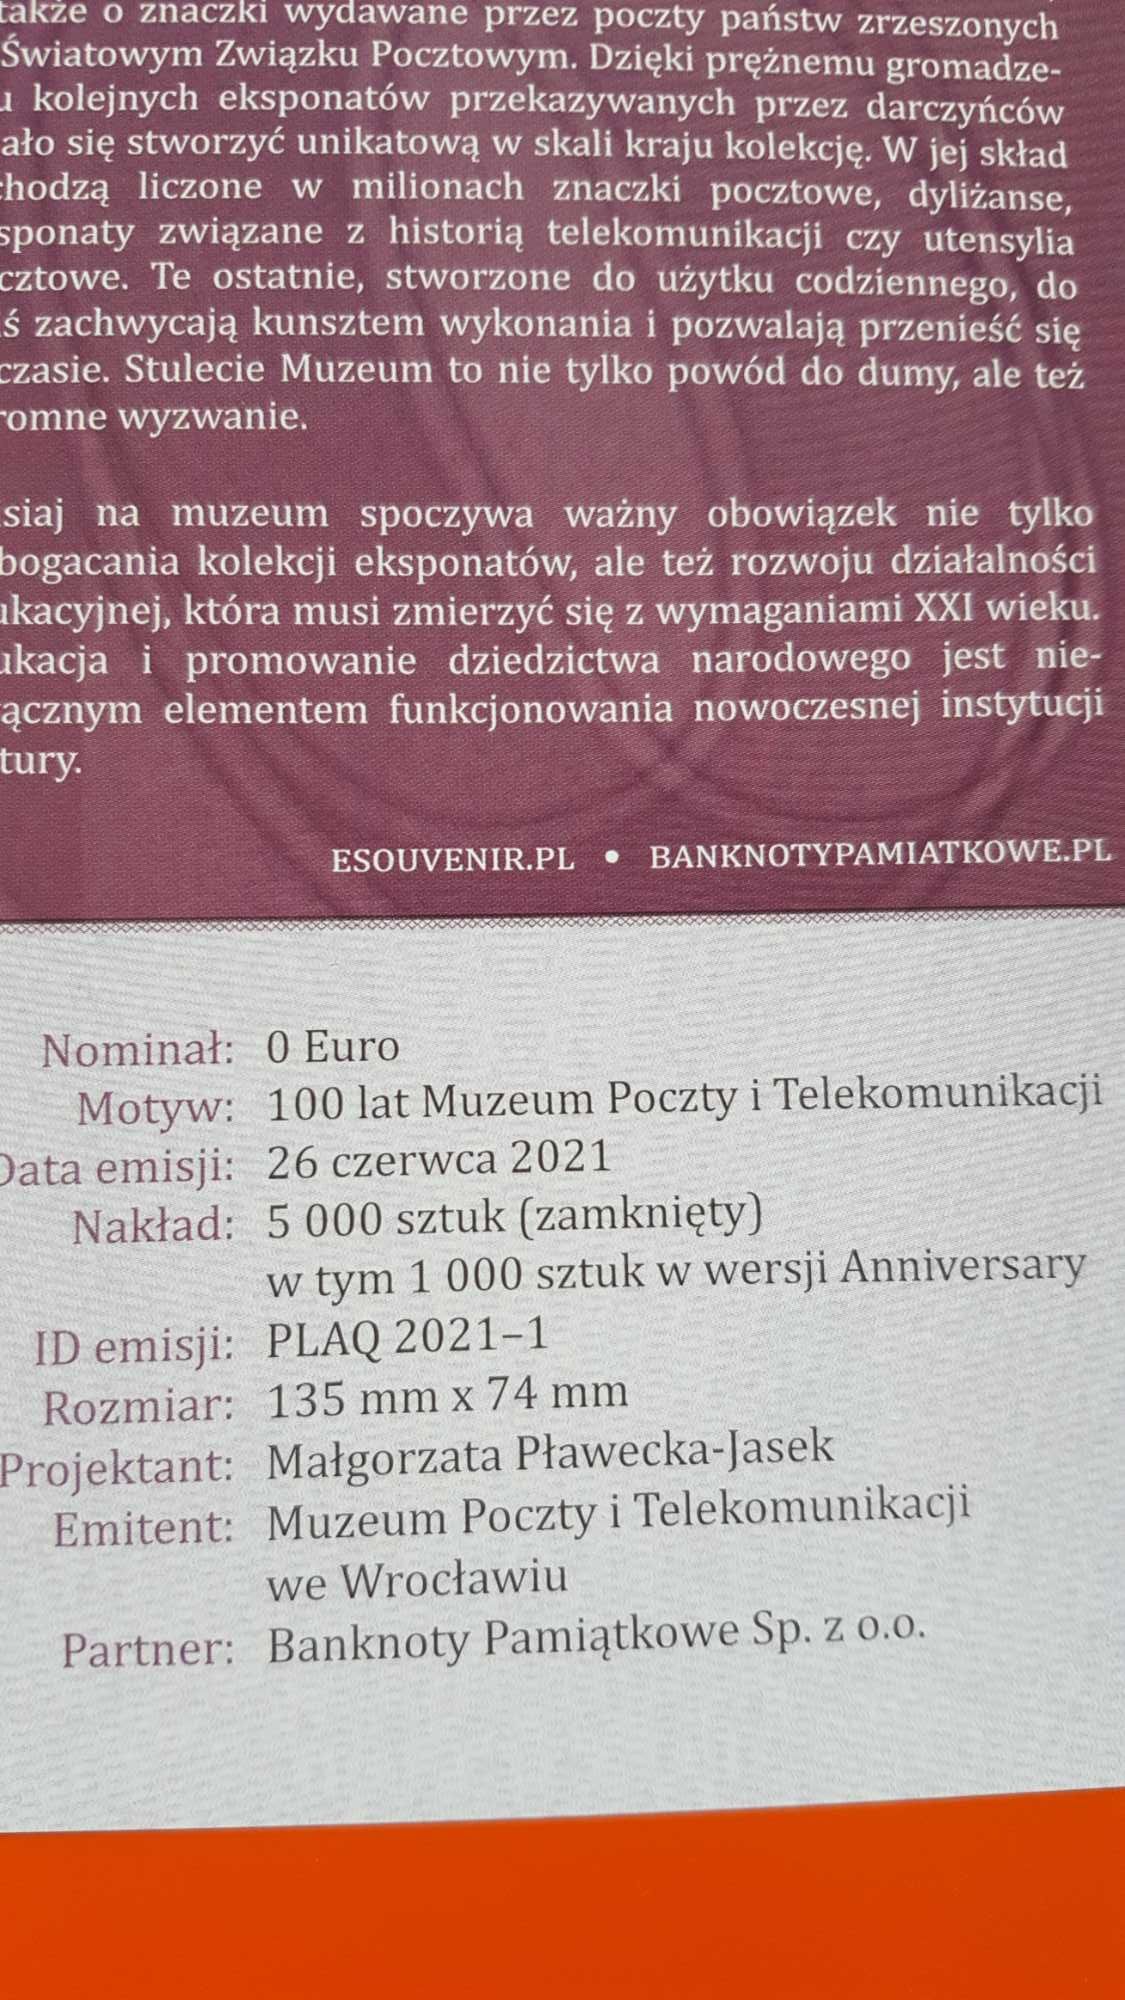 Banknot 0 euro 100 Lat Muzeum Poczty i Telekomunikacji - anniversary